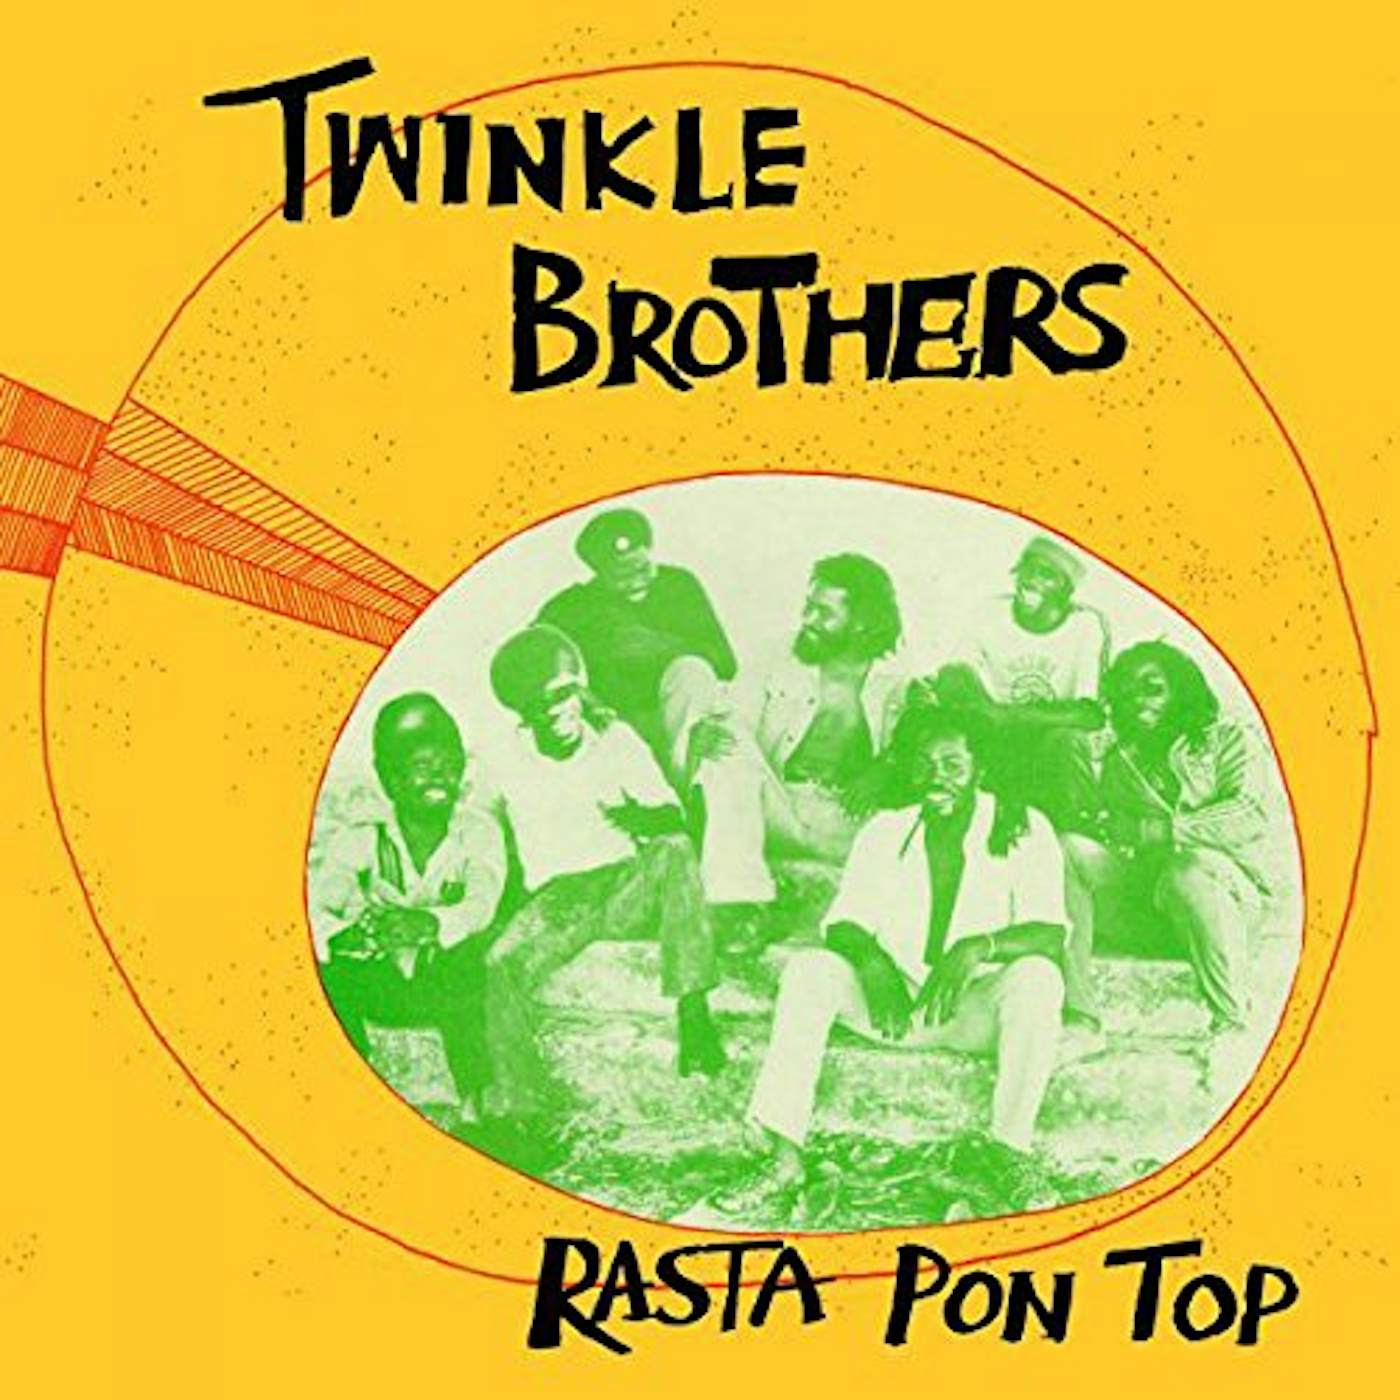 The Twinkle Brothers RASTA PON TOP CD